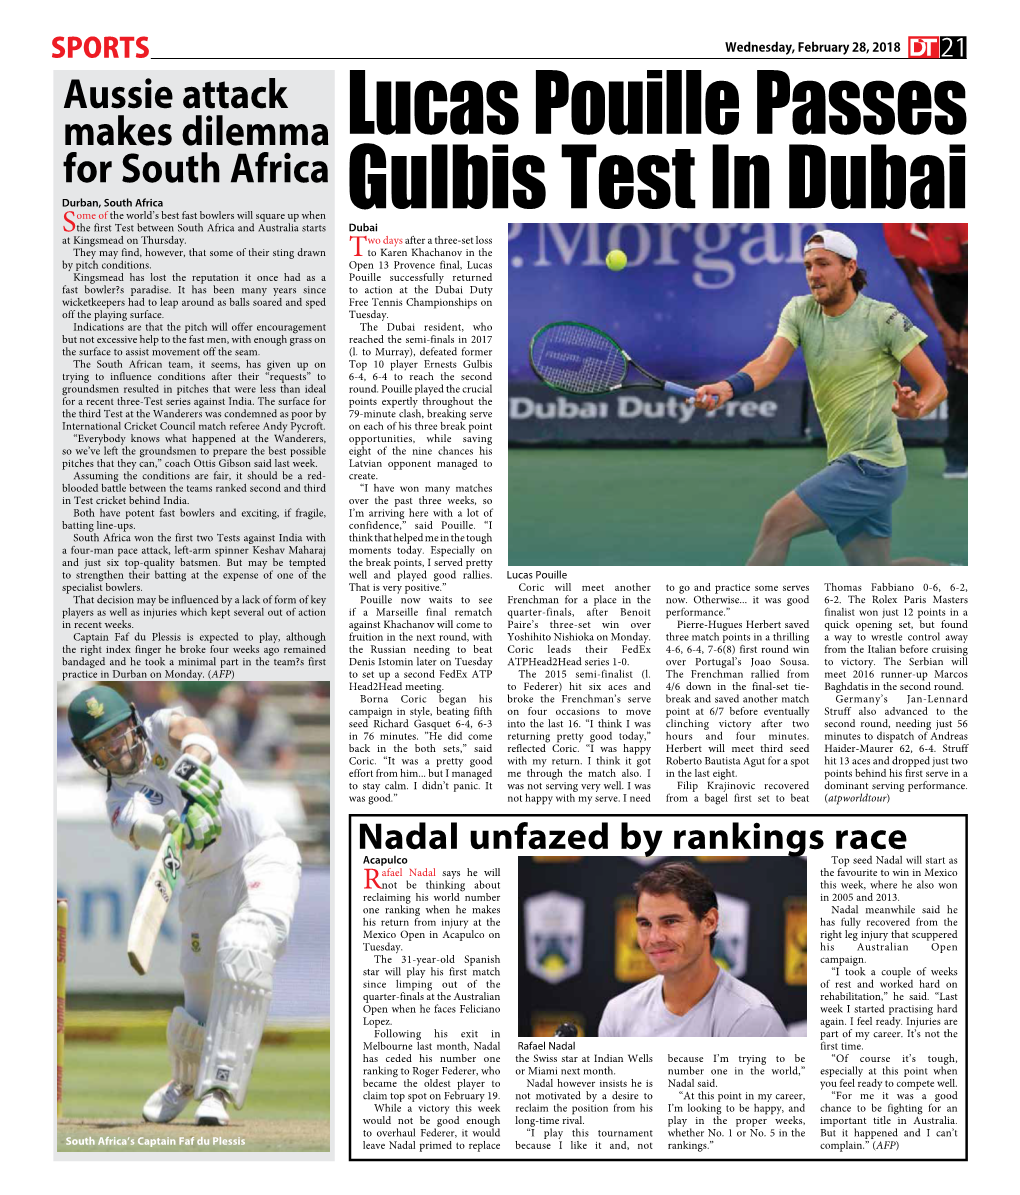 Lucas Pouille Passes Gulbis Test in Dubai